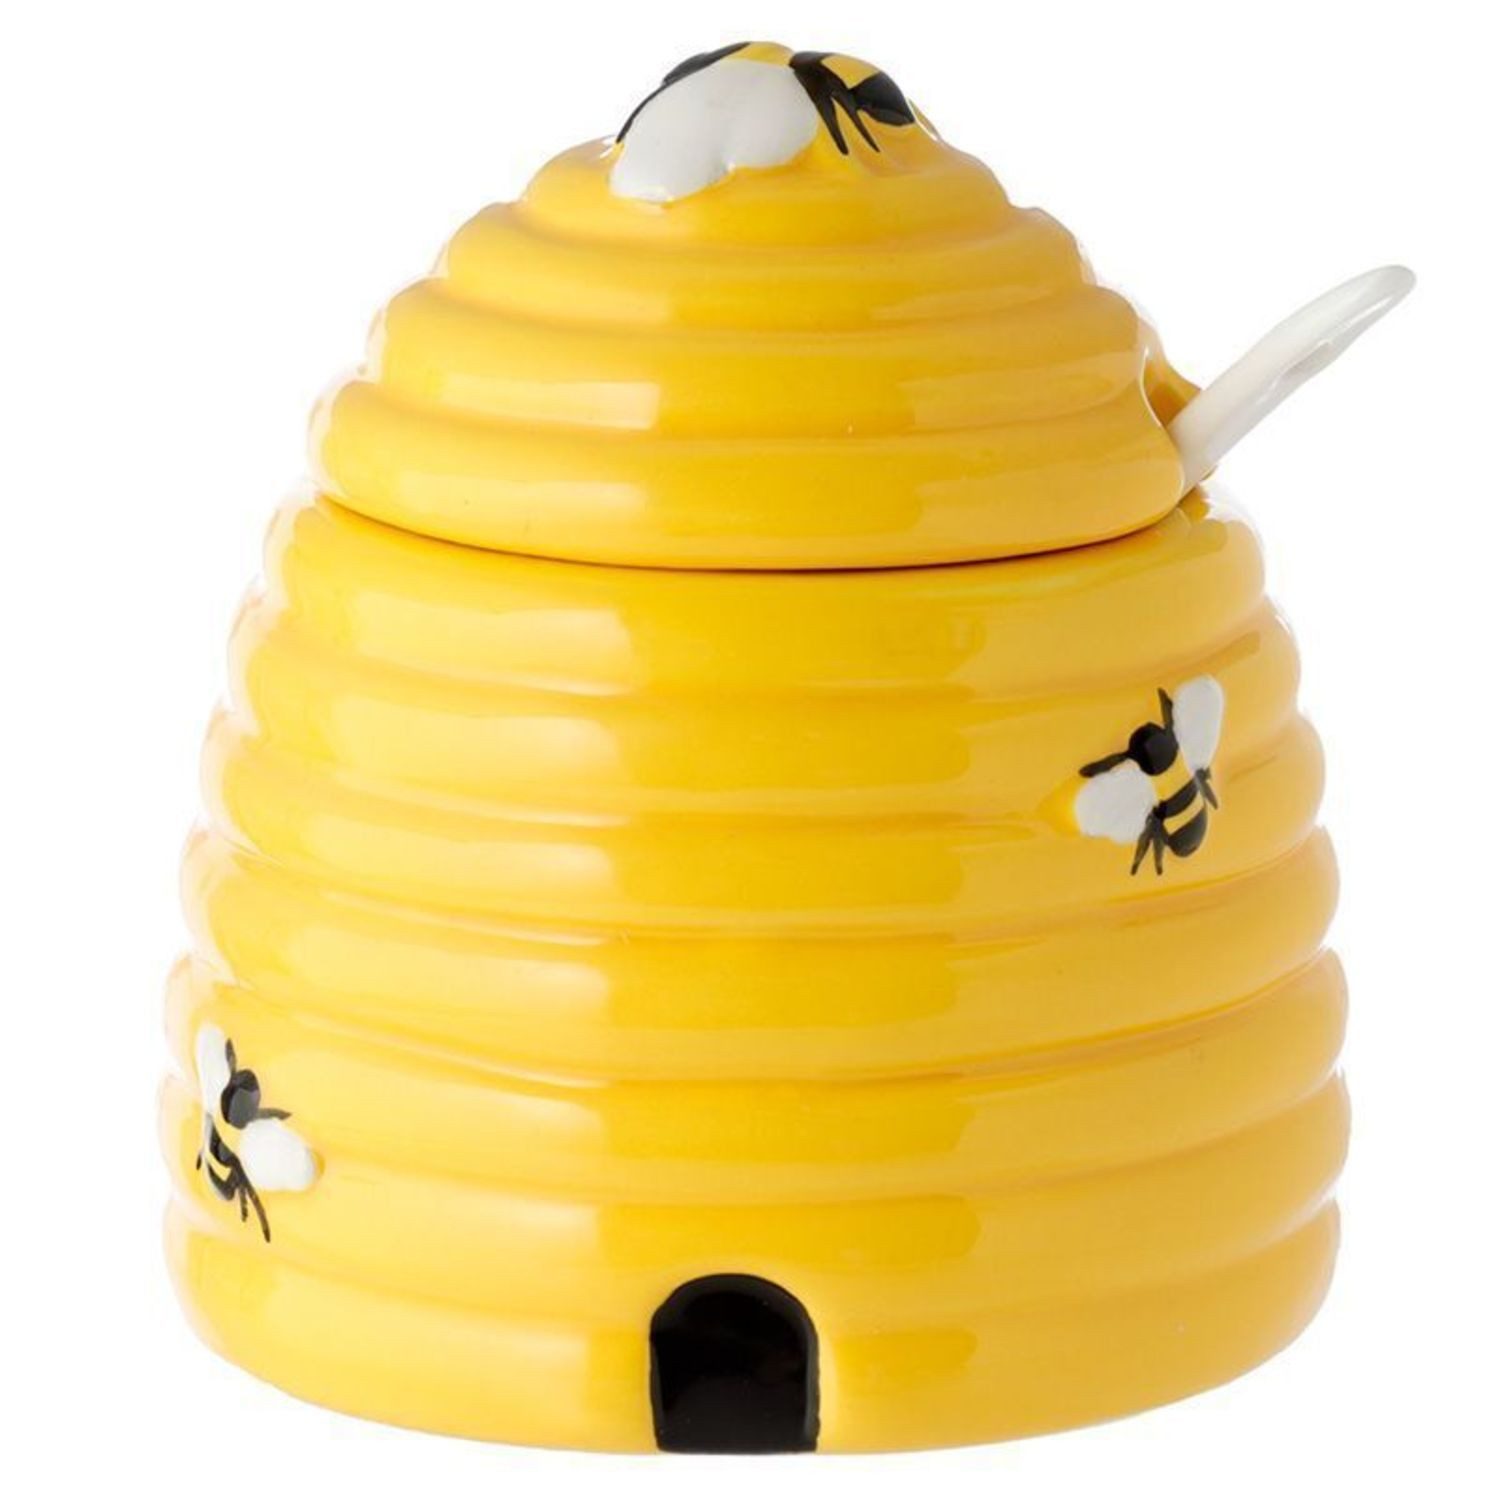 Puckator Honigglas Bienenstock Honigtopf mit Deckel und Löffel